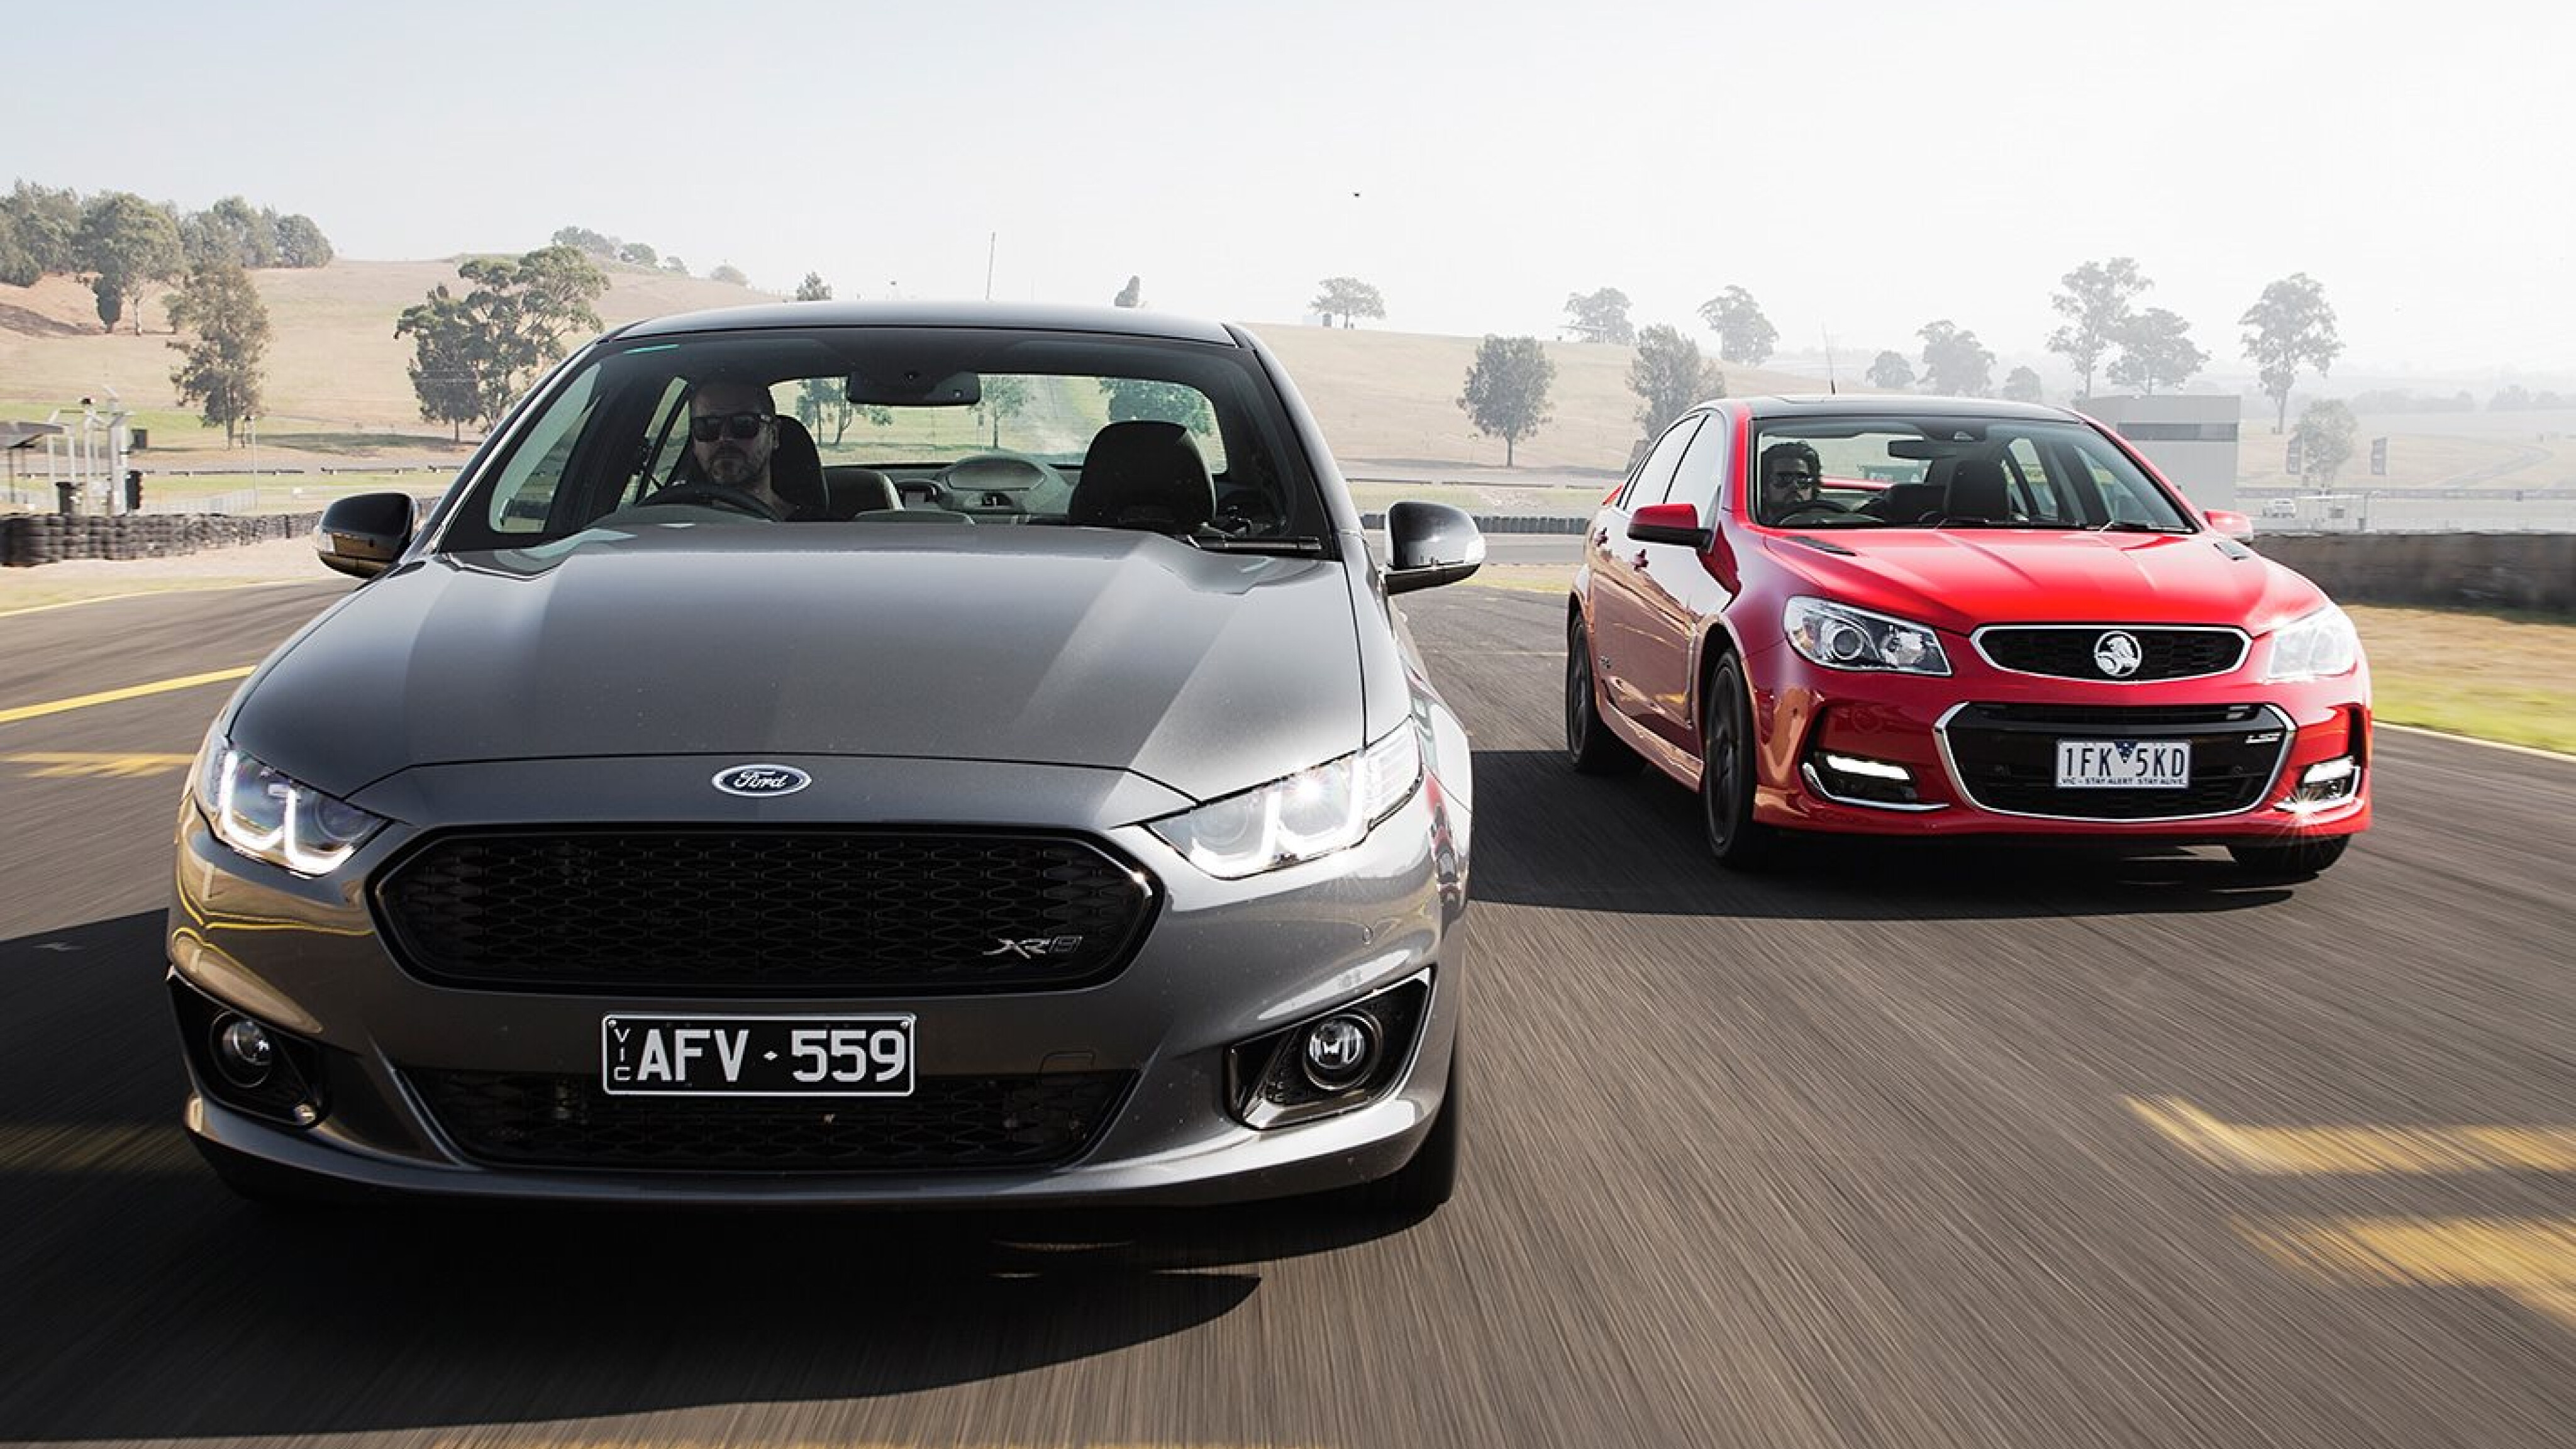 Ford Falcon vs Holden Commodore: Behind the scenes